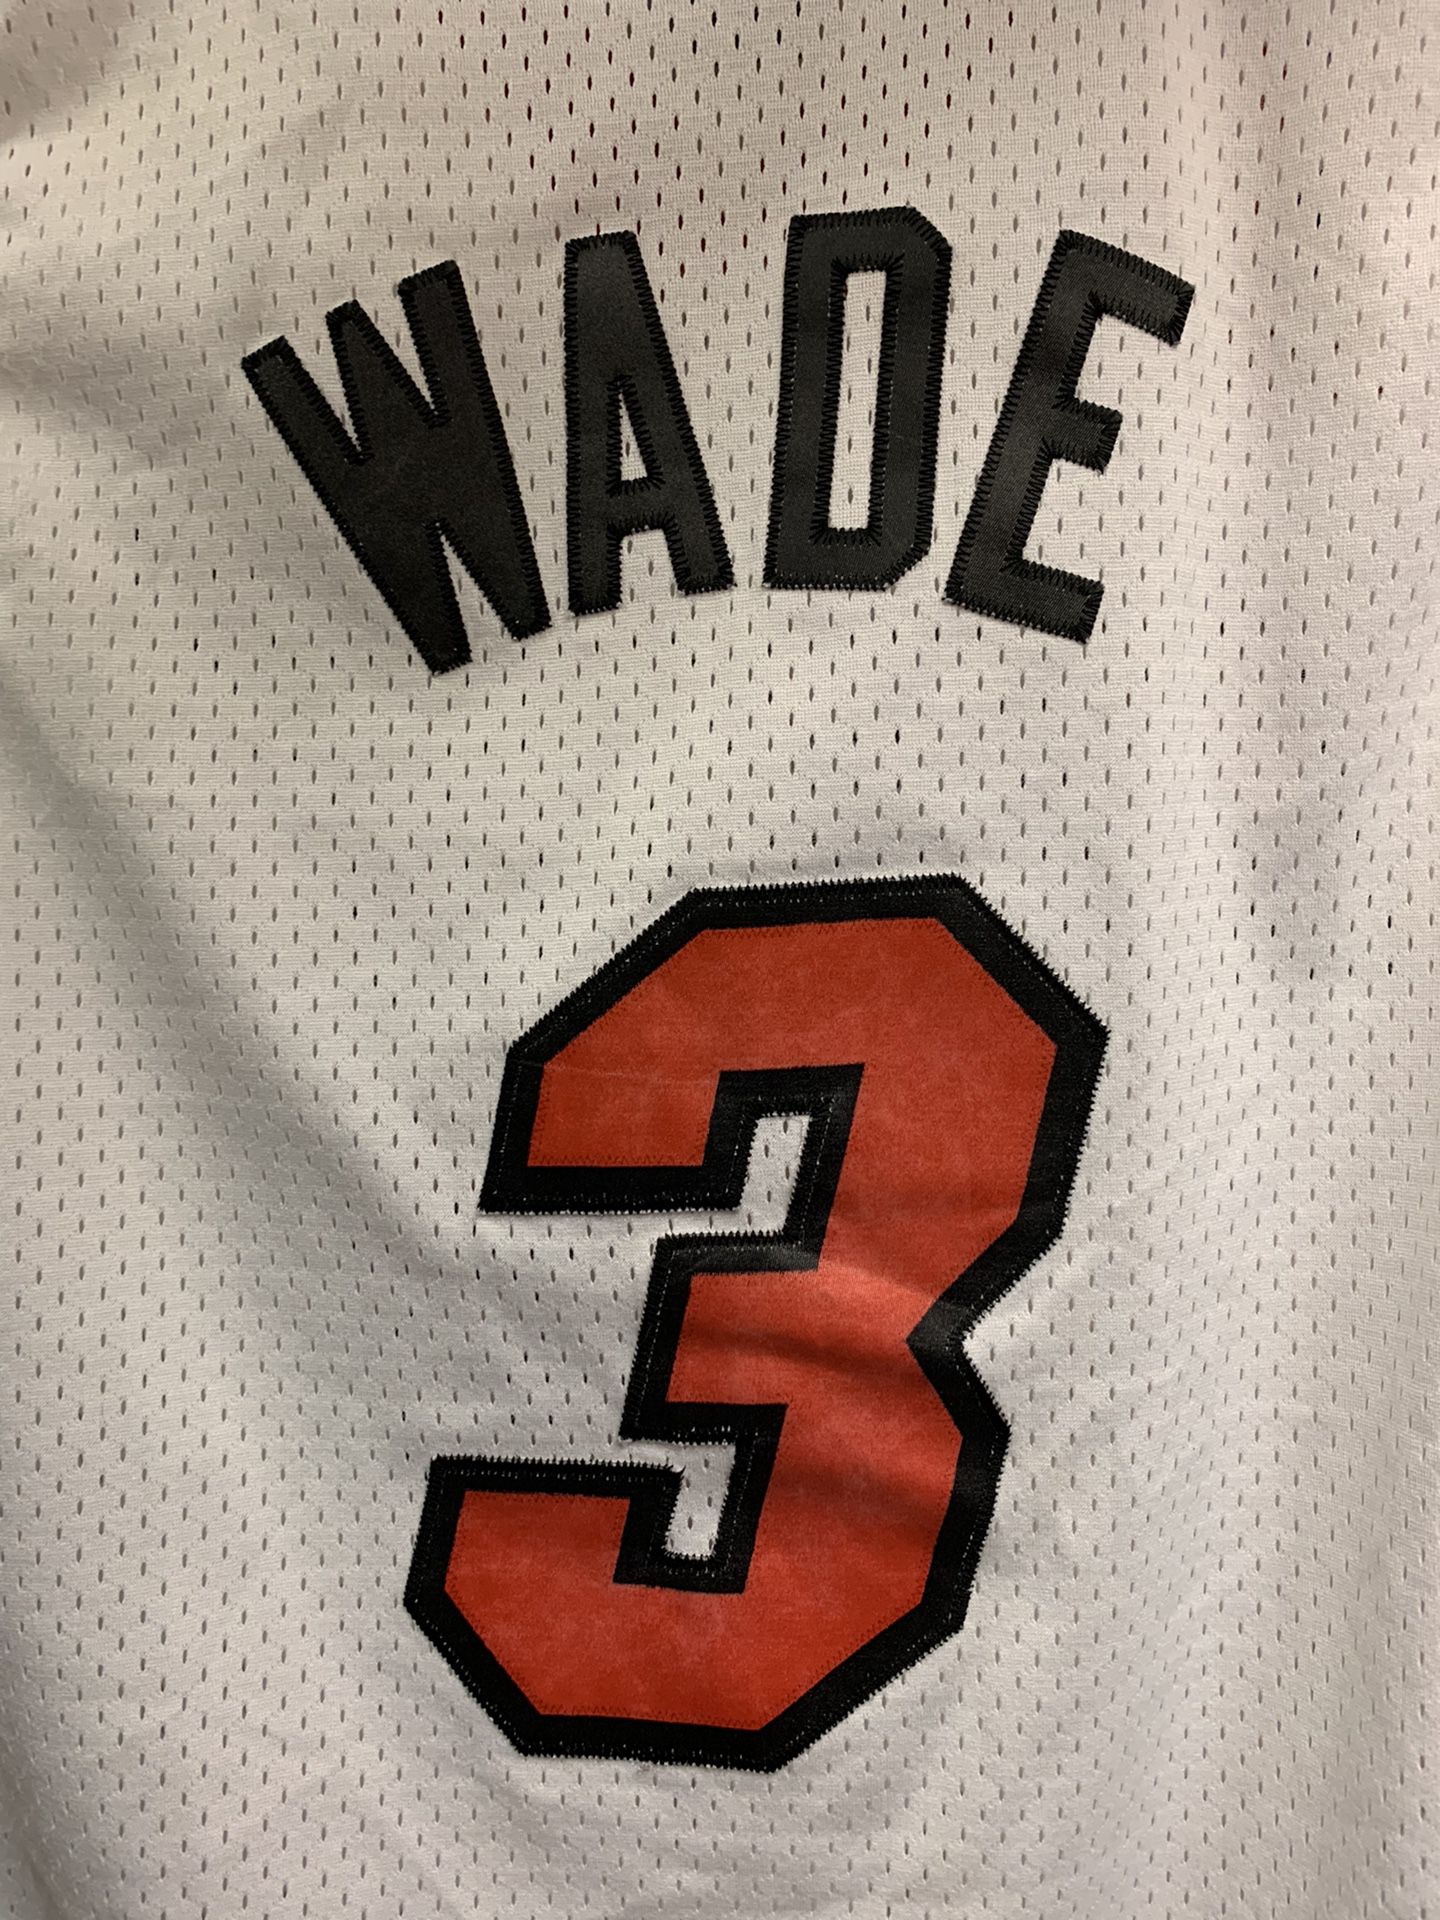 NBA Reebok Miami Heat Jersey 'Dwayne Wade' — SoleHut